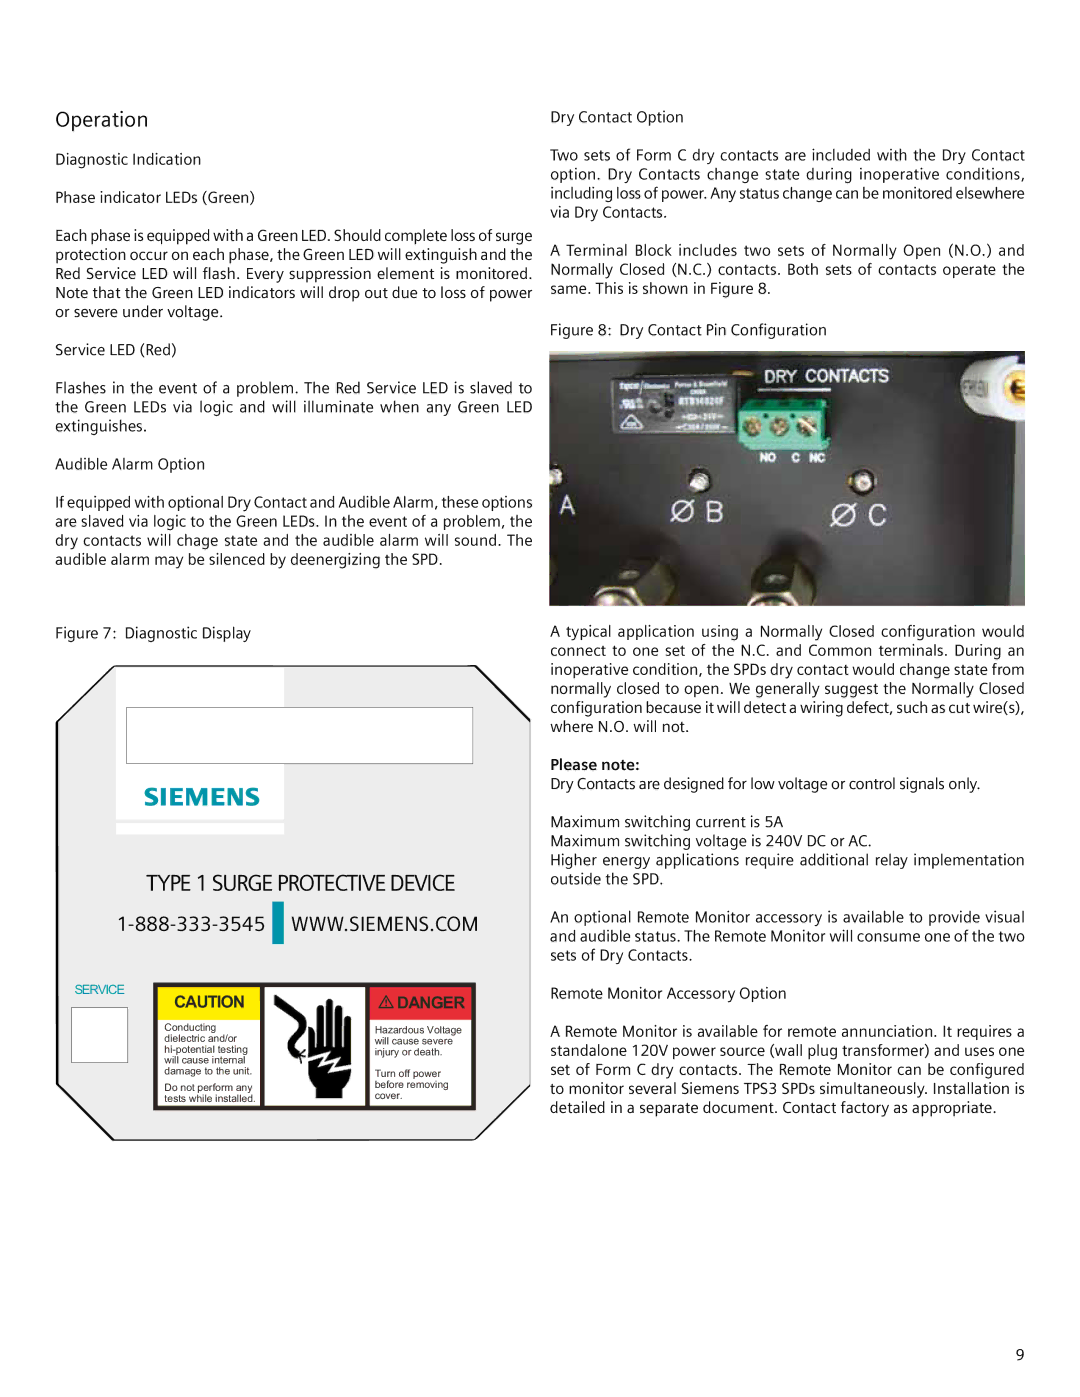 Siemens TPS3 11 user manual Operation, Please note 